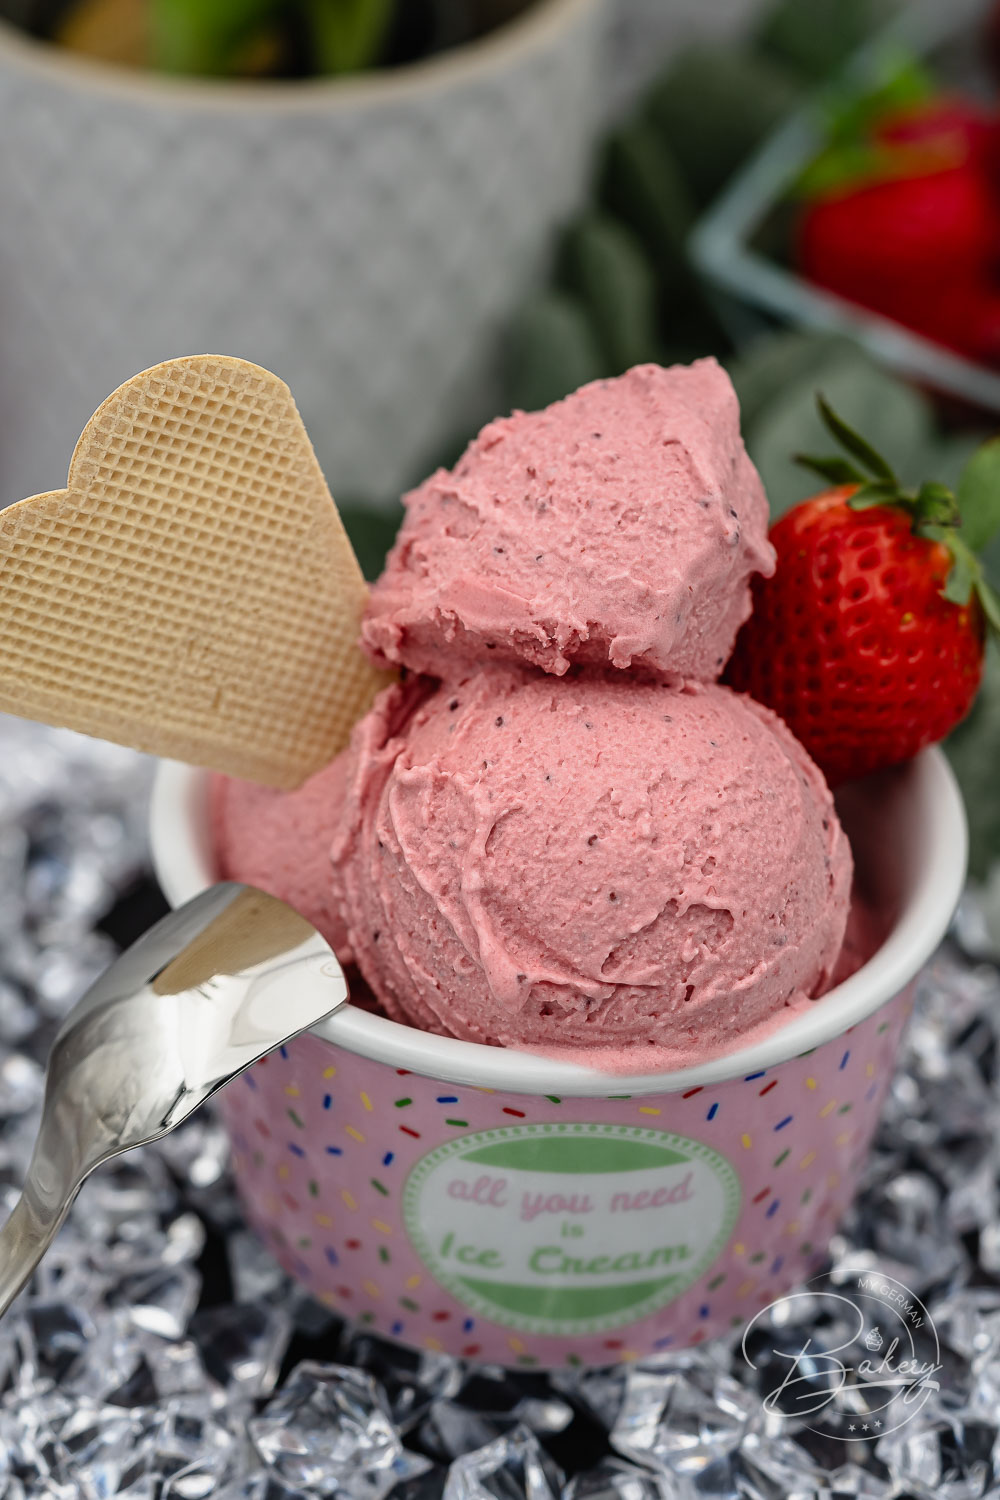 Quick and easy strawberry yogurt ice cream recipe for delicious ice cream in just a few minutes. Creamy strawberry ice cream as a frozen yogurt